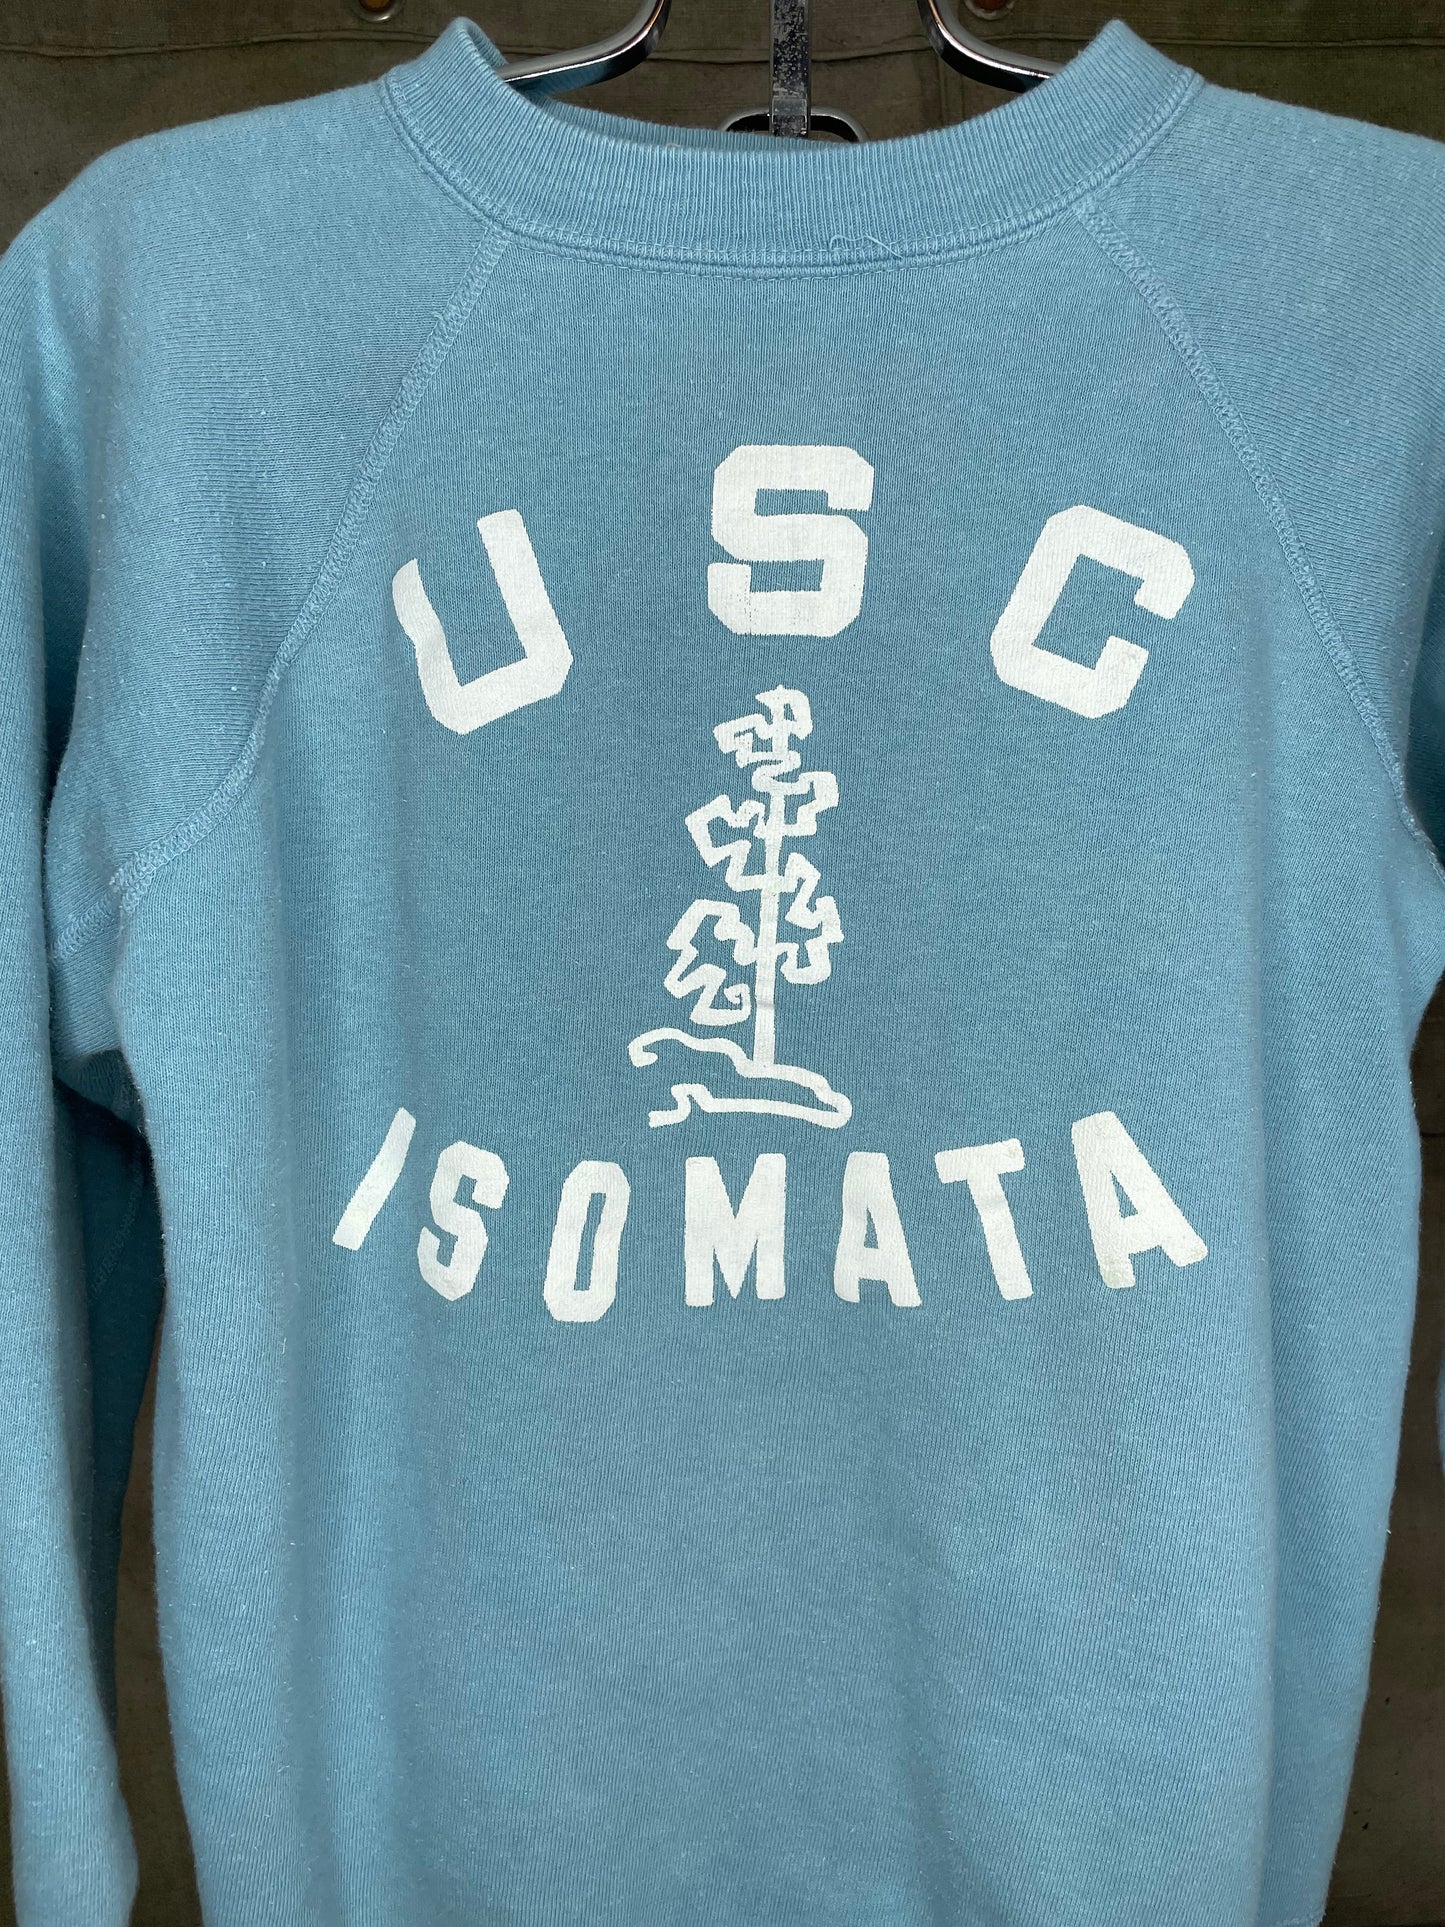 Vintage College Sweatshirt USC ISOMATA 60s 70s RARE